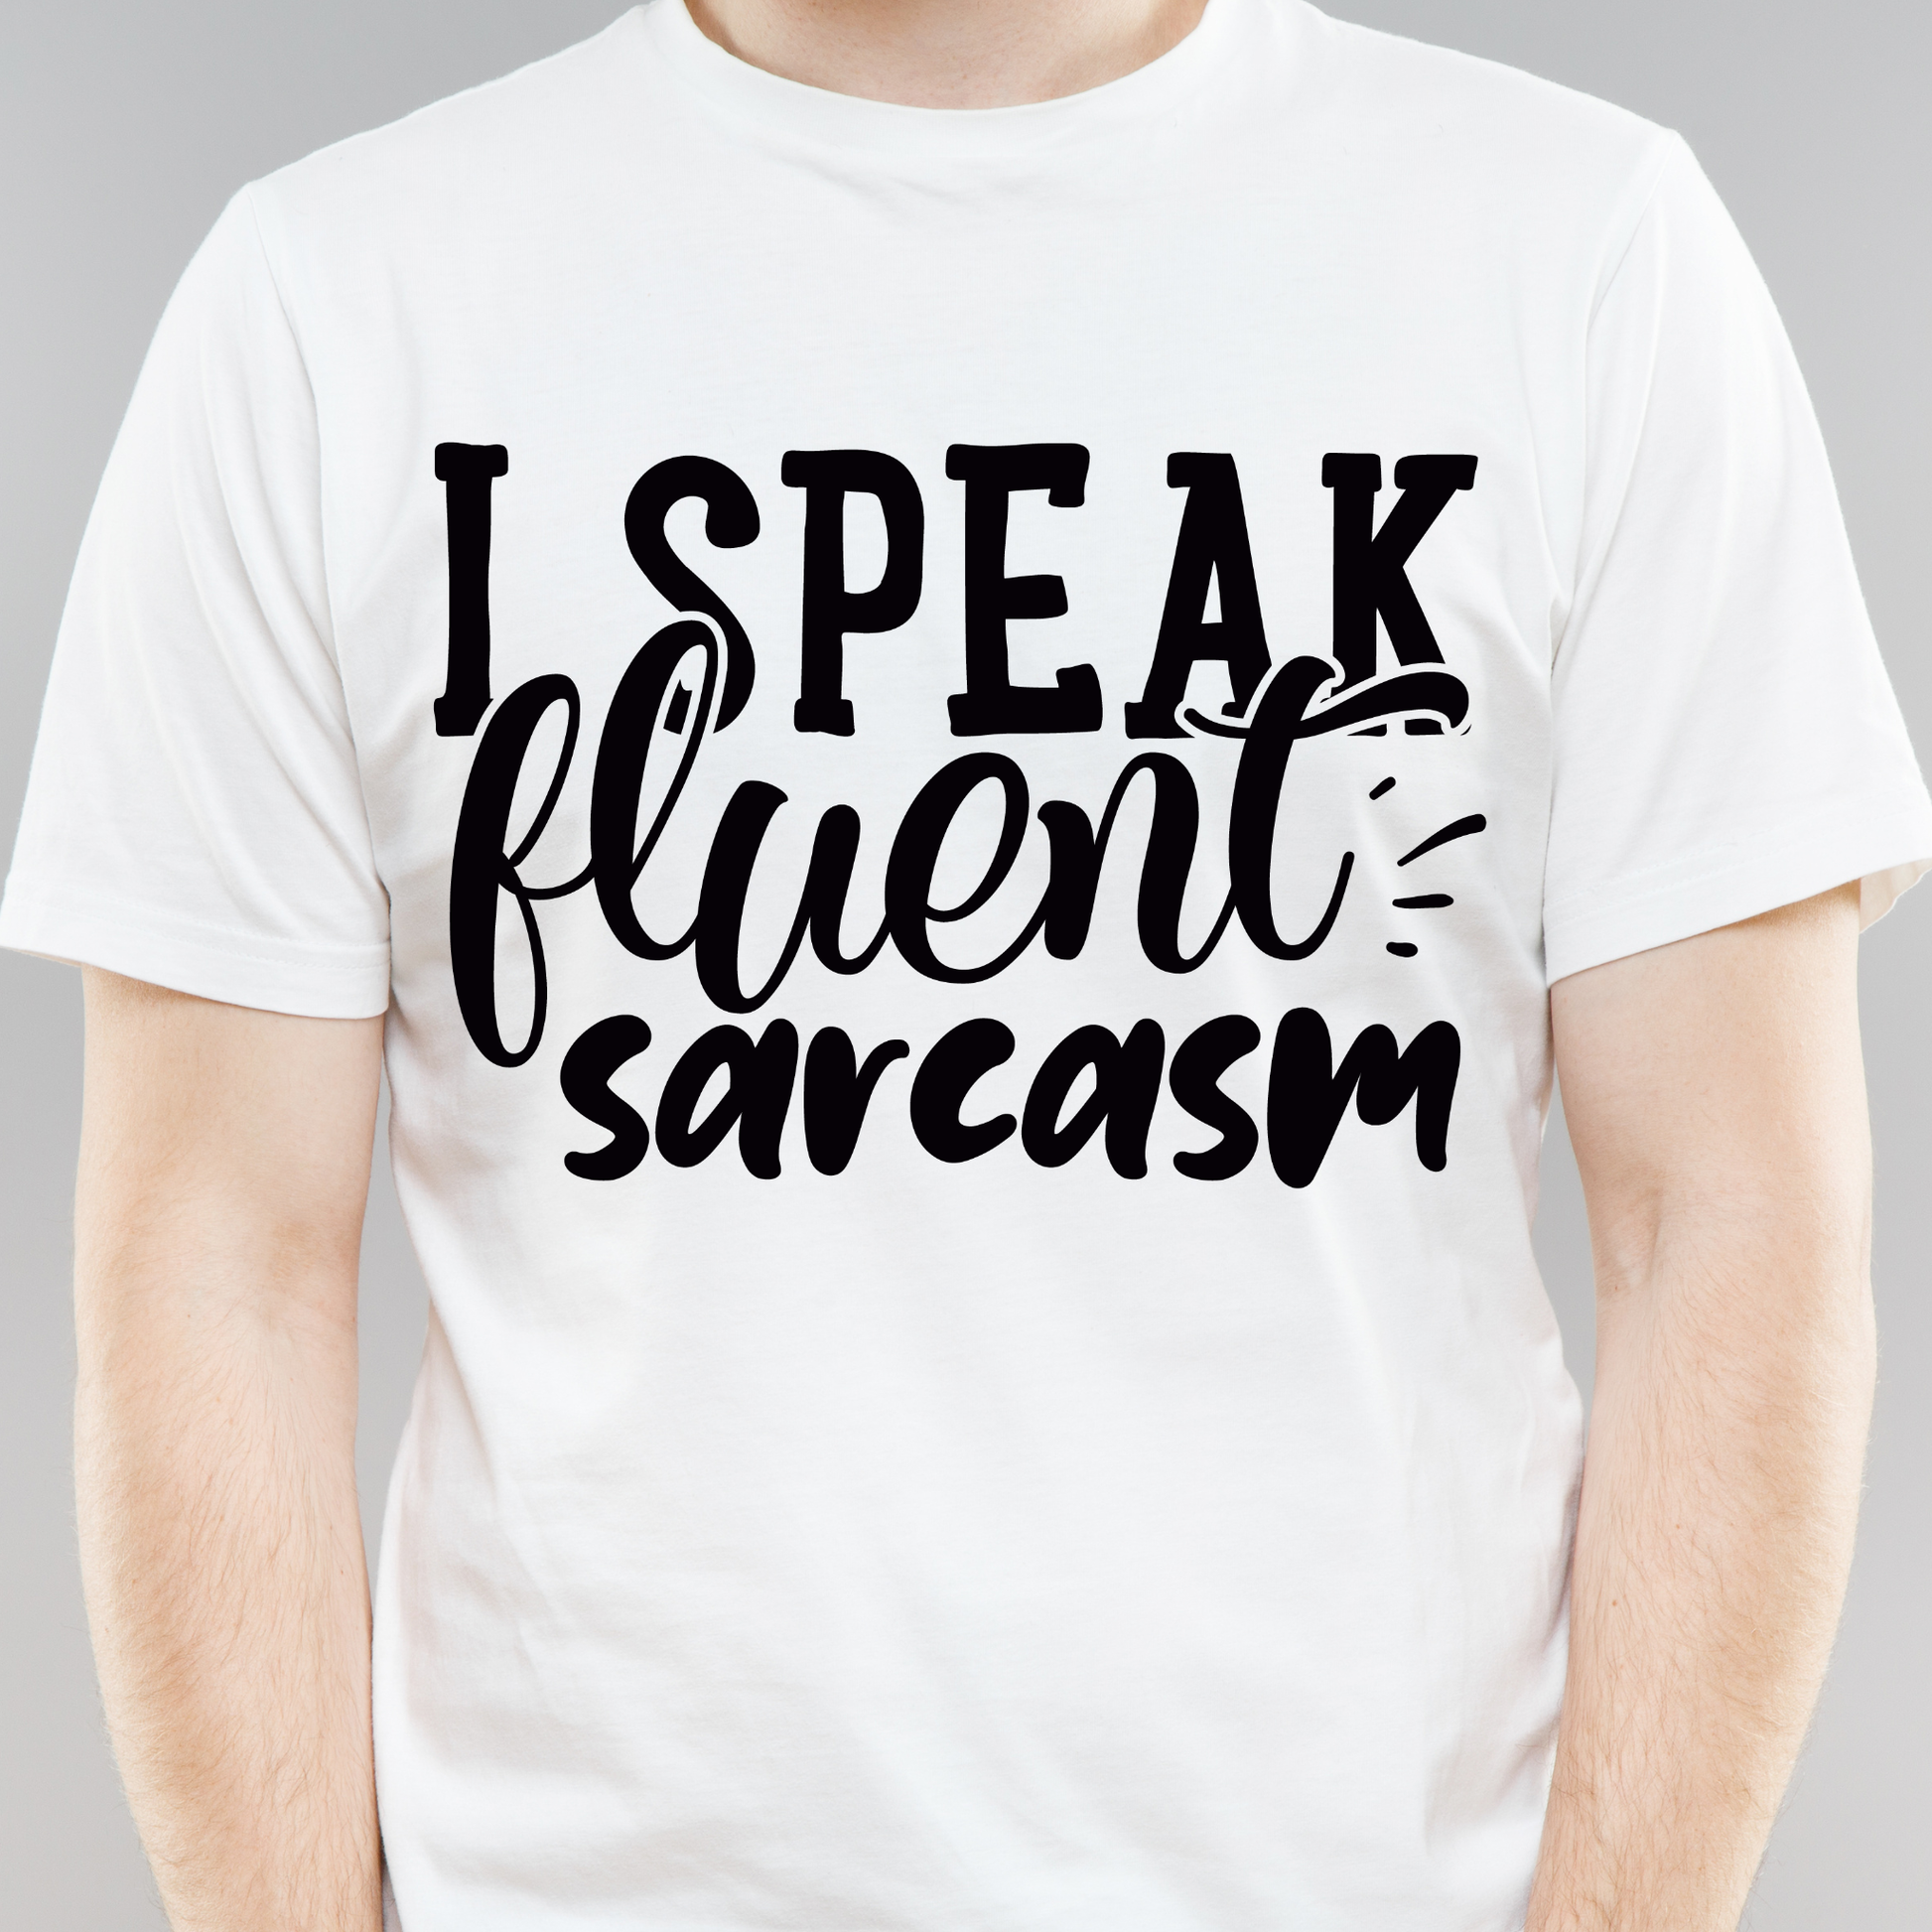 I speak fluent sarcasm men's funny t-shirt - Premium t-shirt from Lees Krazy Teez - Just $21.95! Shop now at Lees Krazy Teez